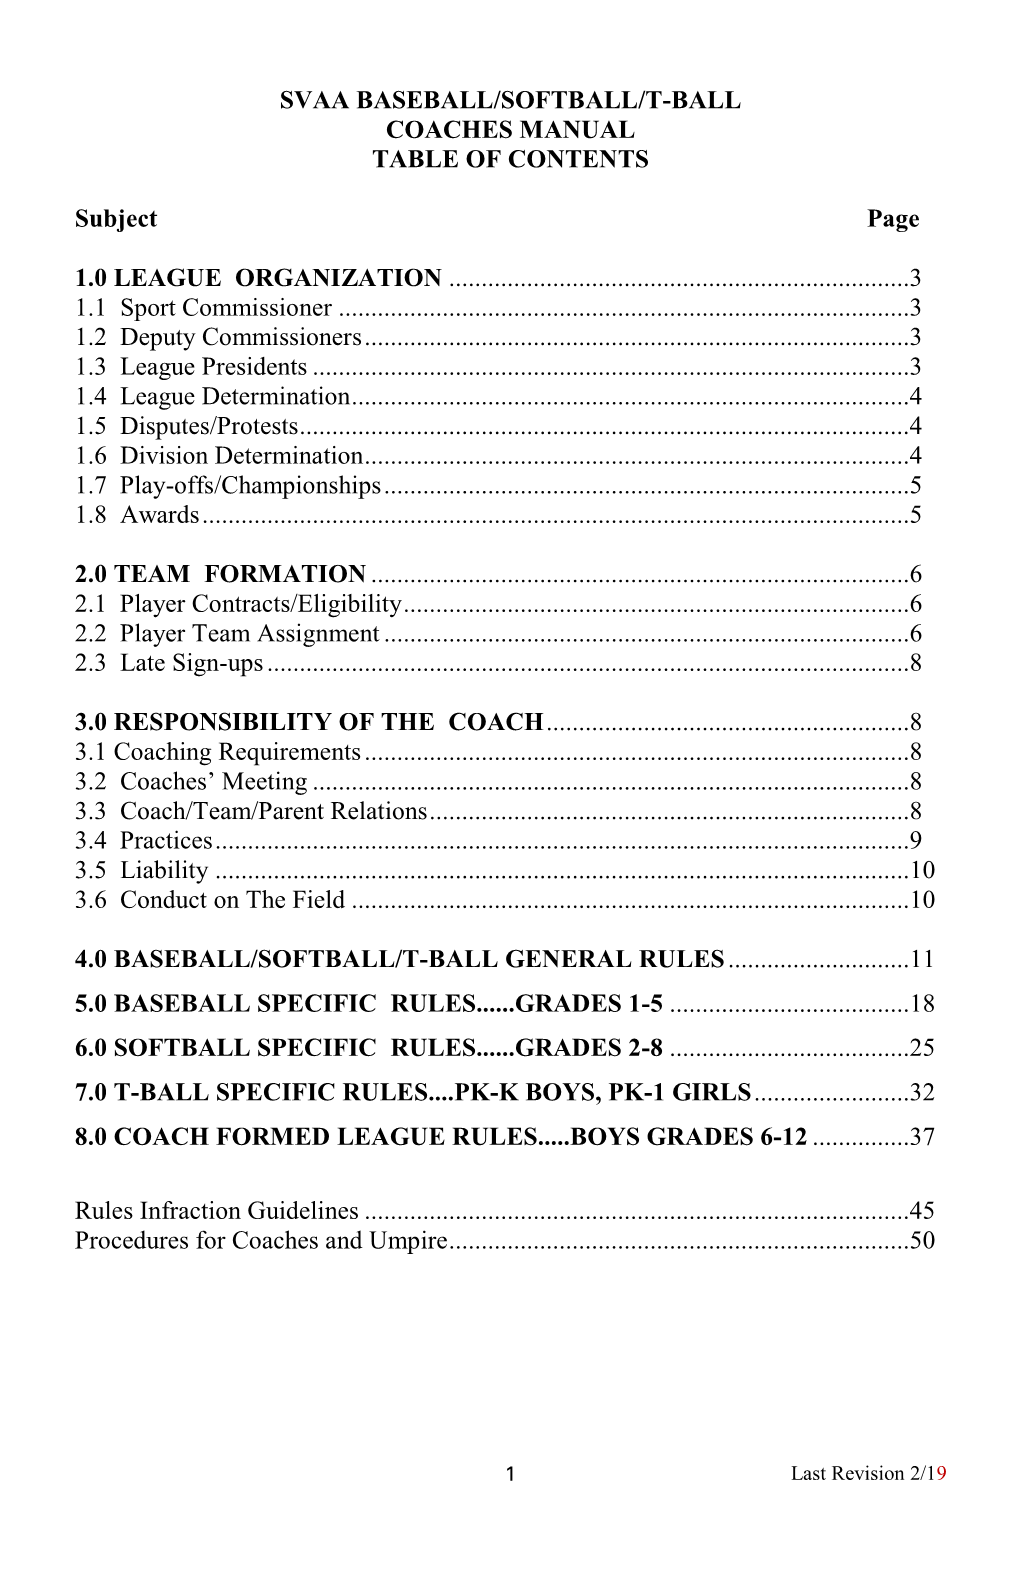 Svaa Baseball/Softball/T-Ball Coaches Manual Table of Contents